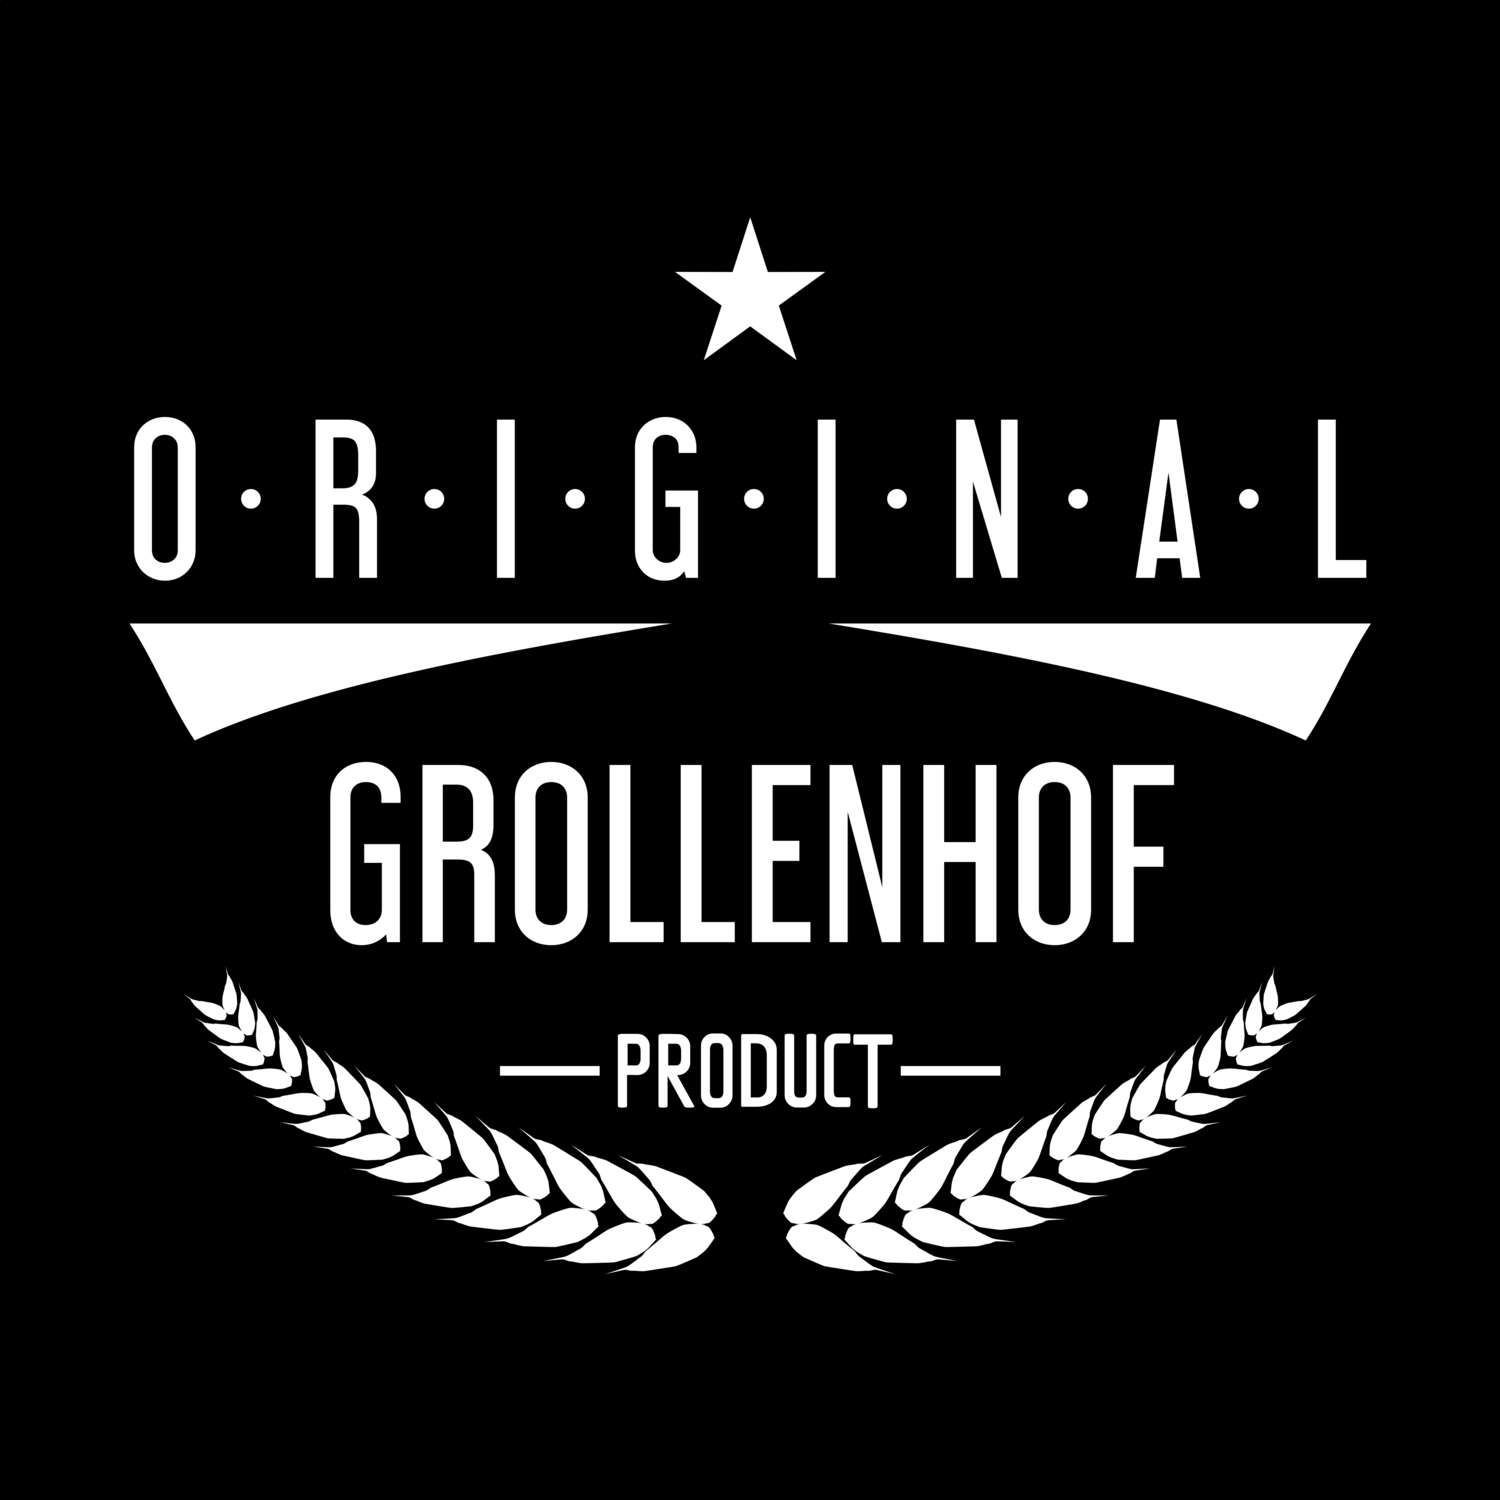 Grollenhof T-Shirt »Original Product«